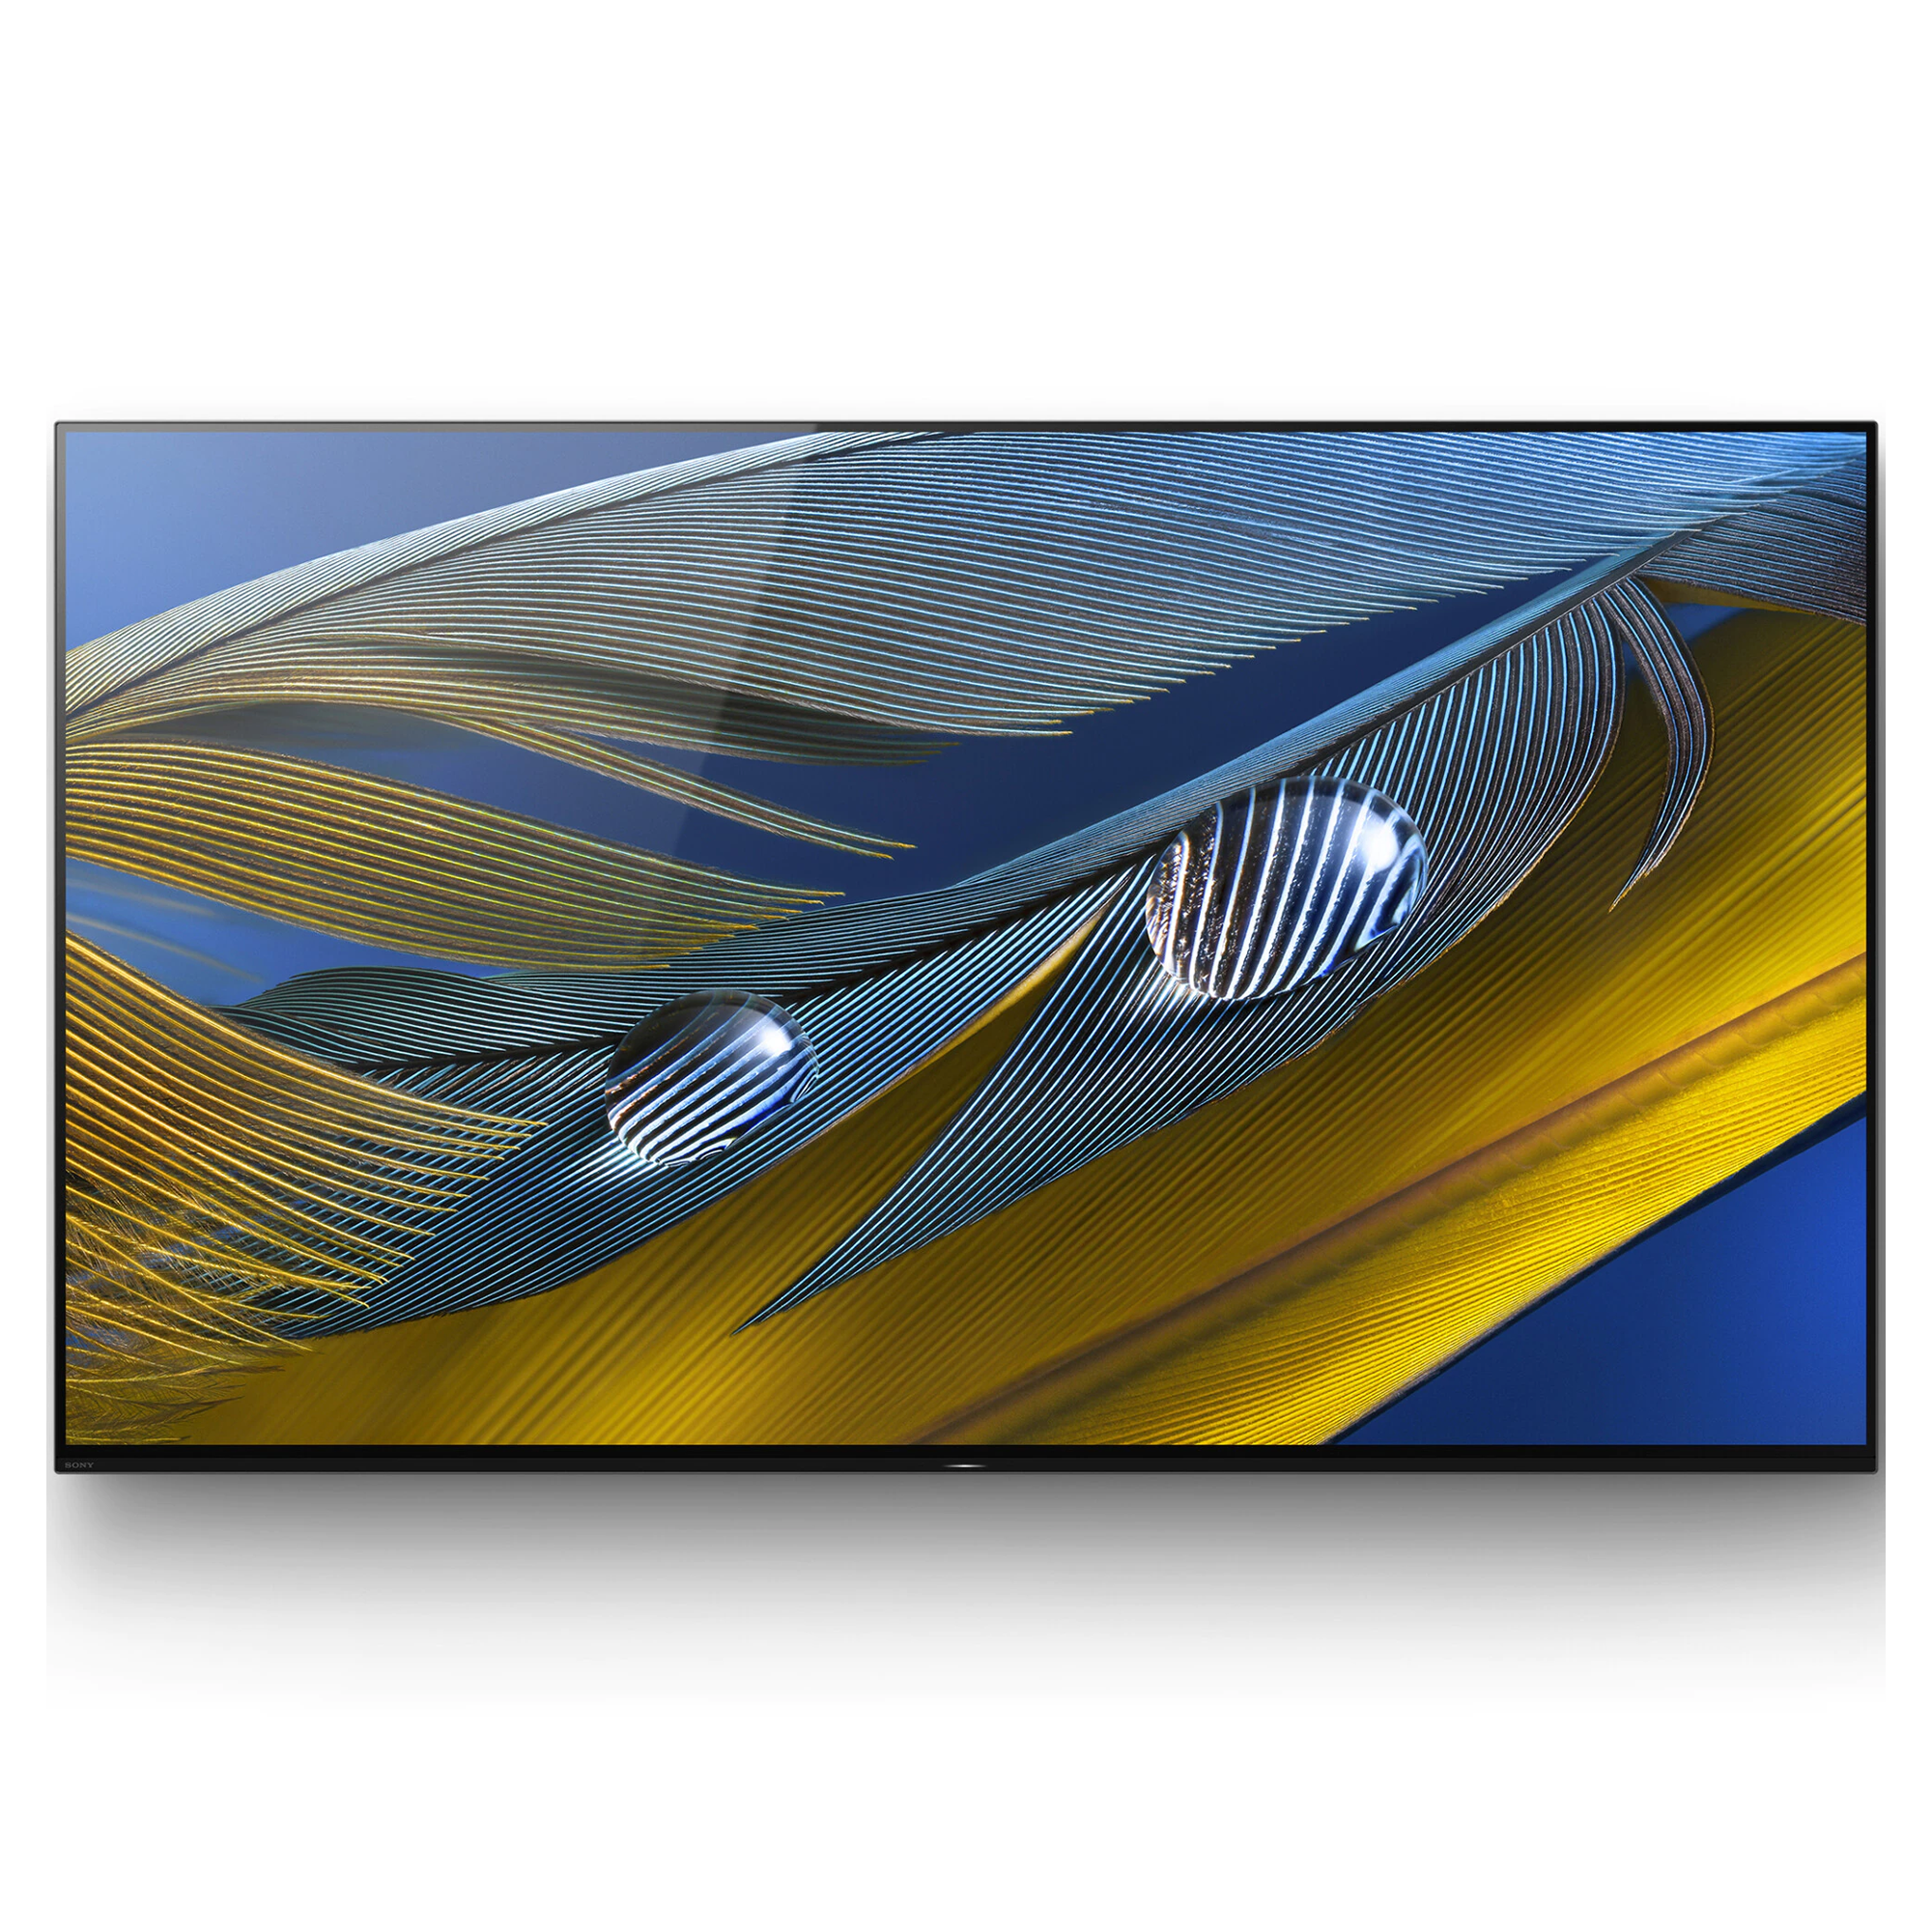 OLED TV Sony XR55A83JAEP